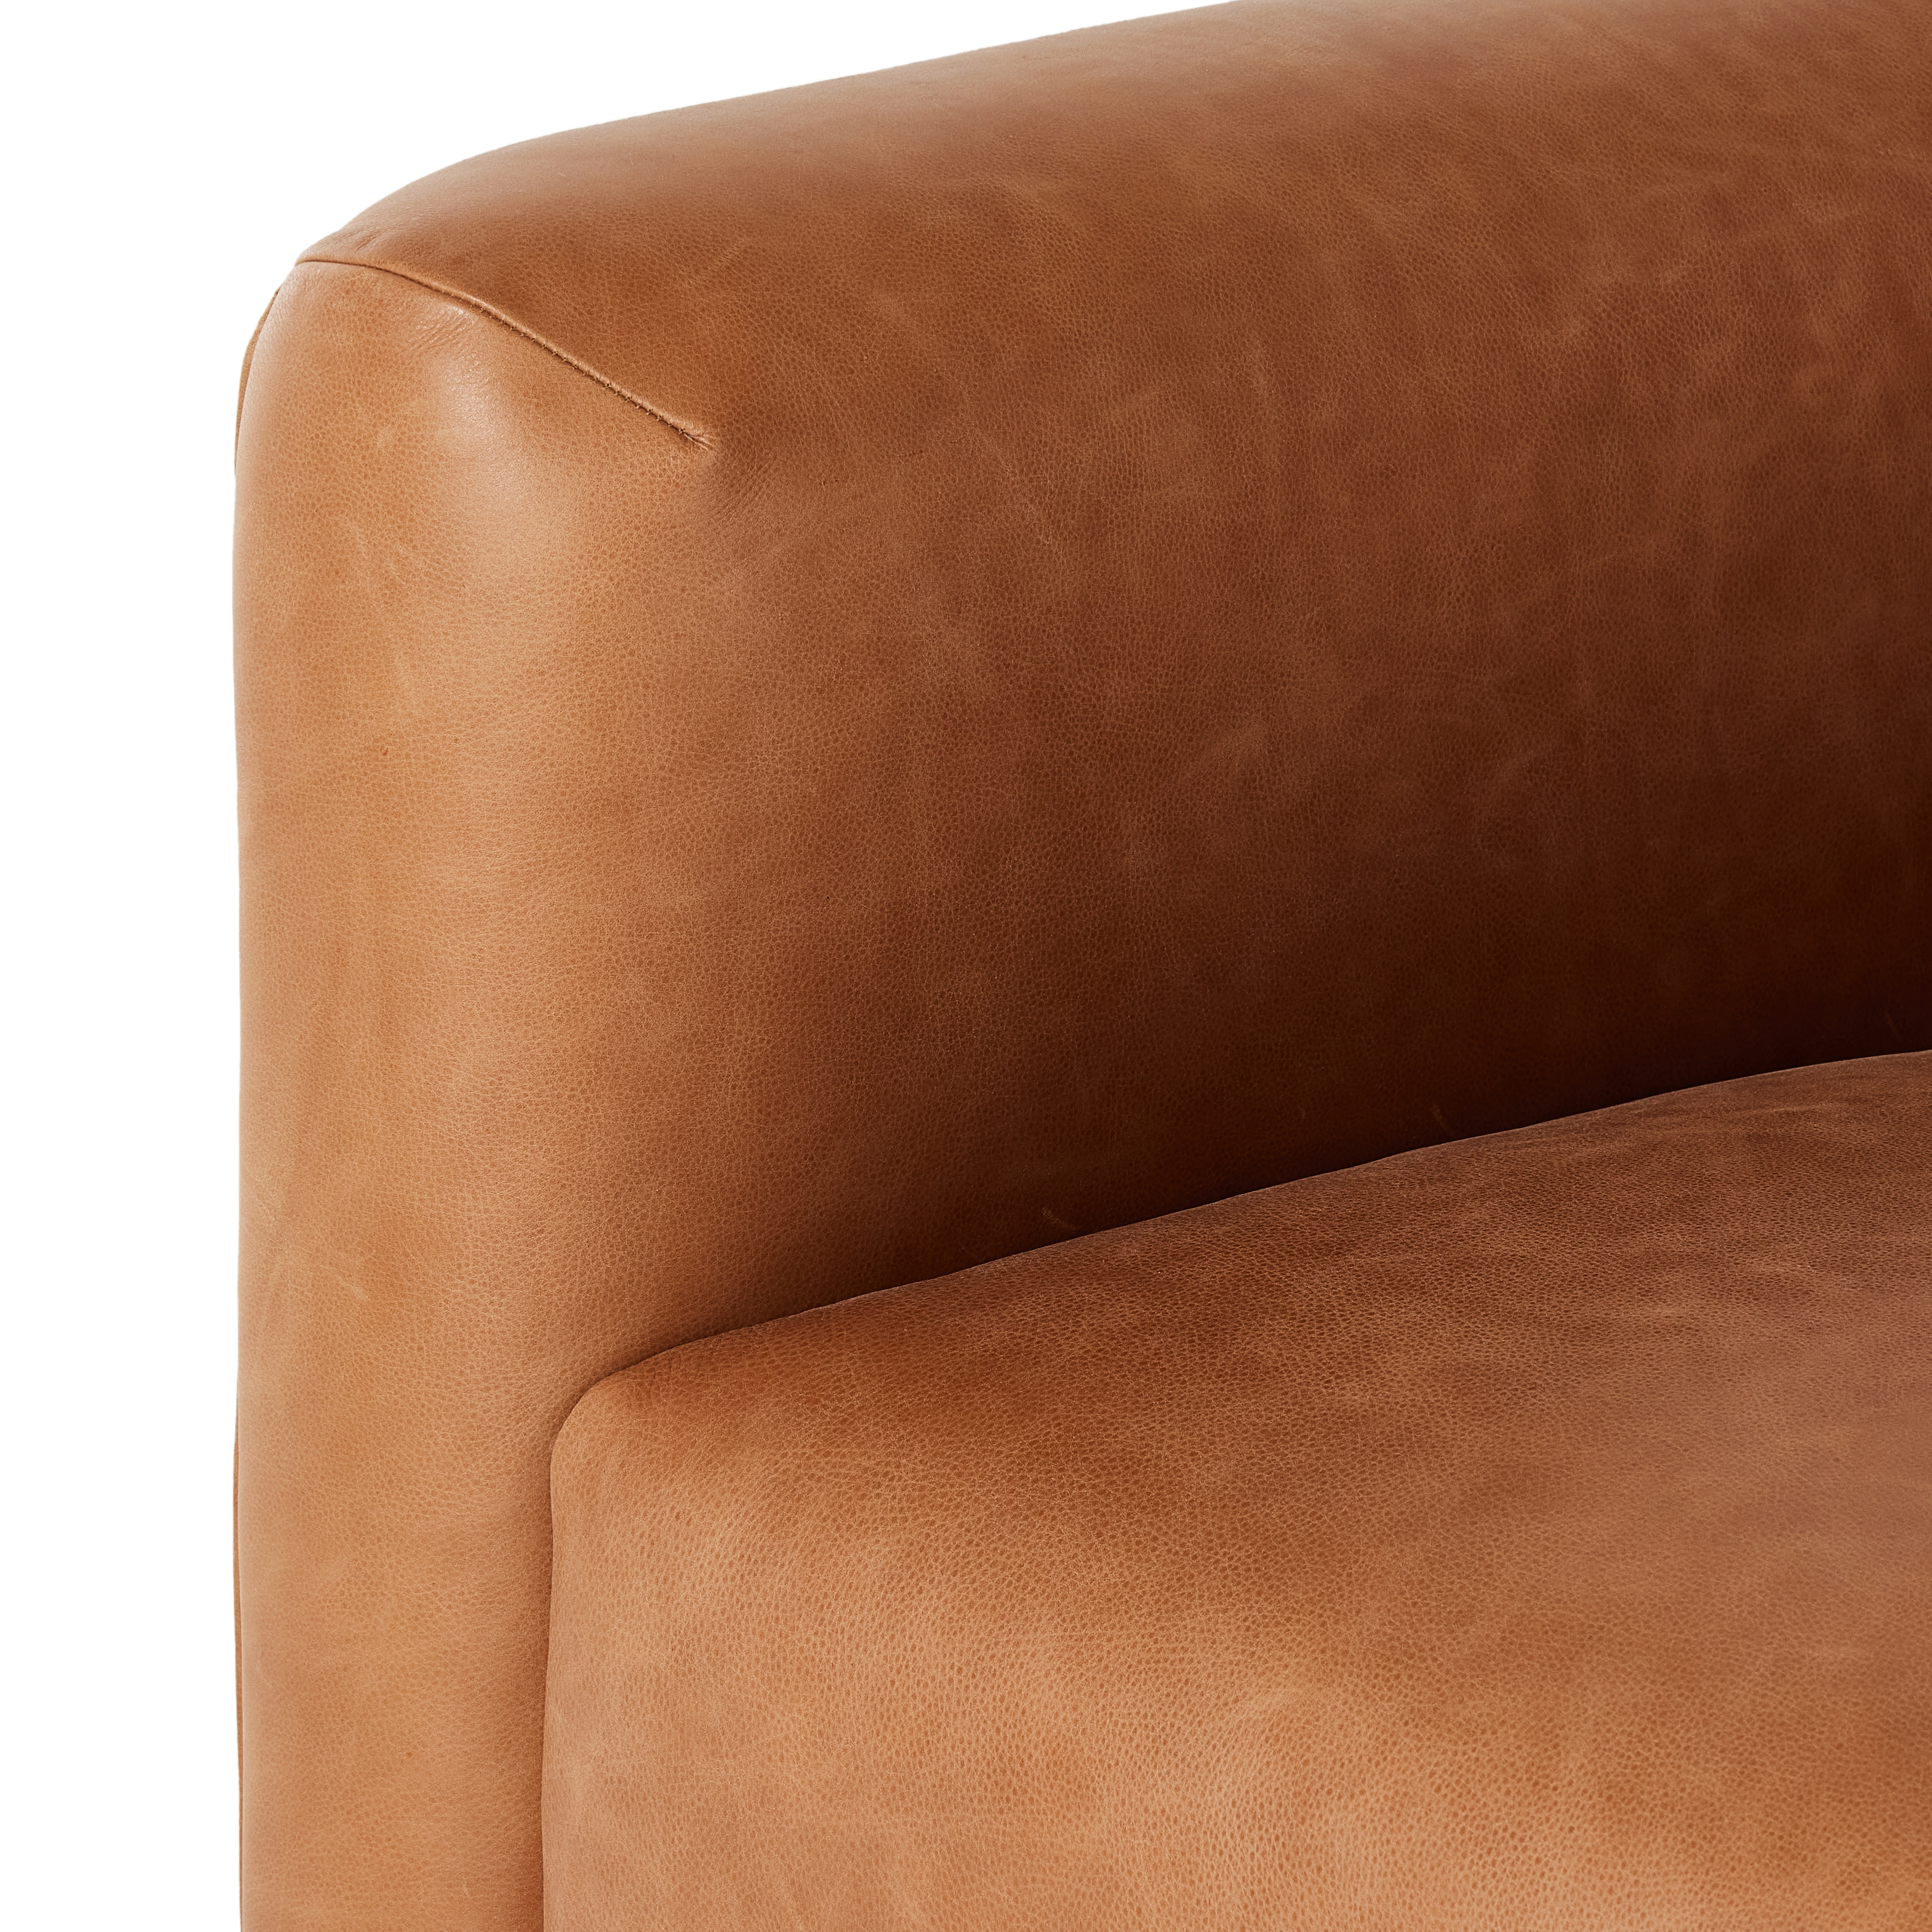 Wellborn Swivel Chair-Palermo Cognac - Image 9